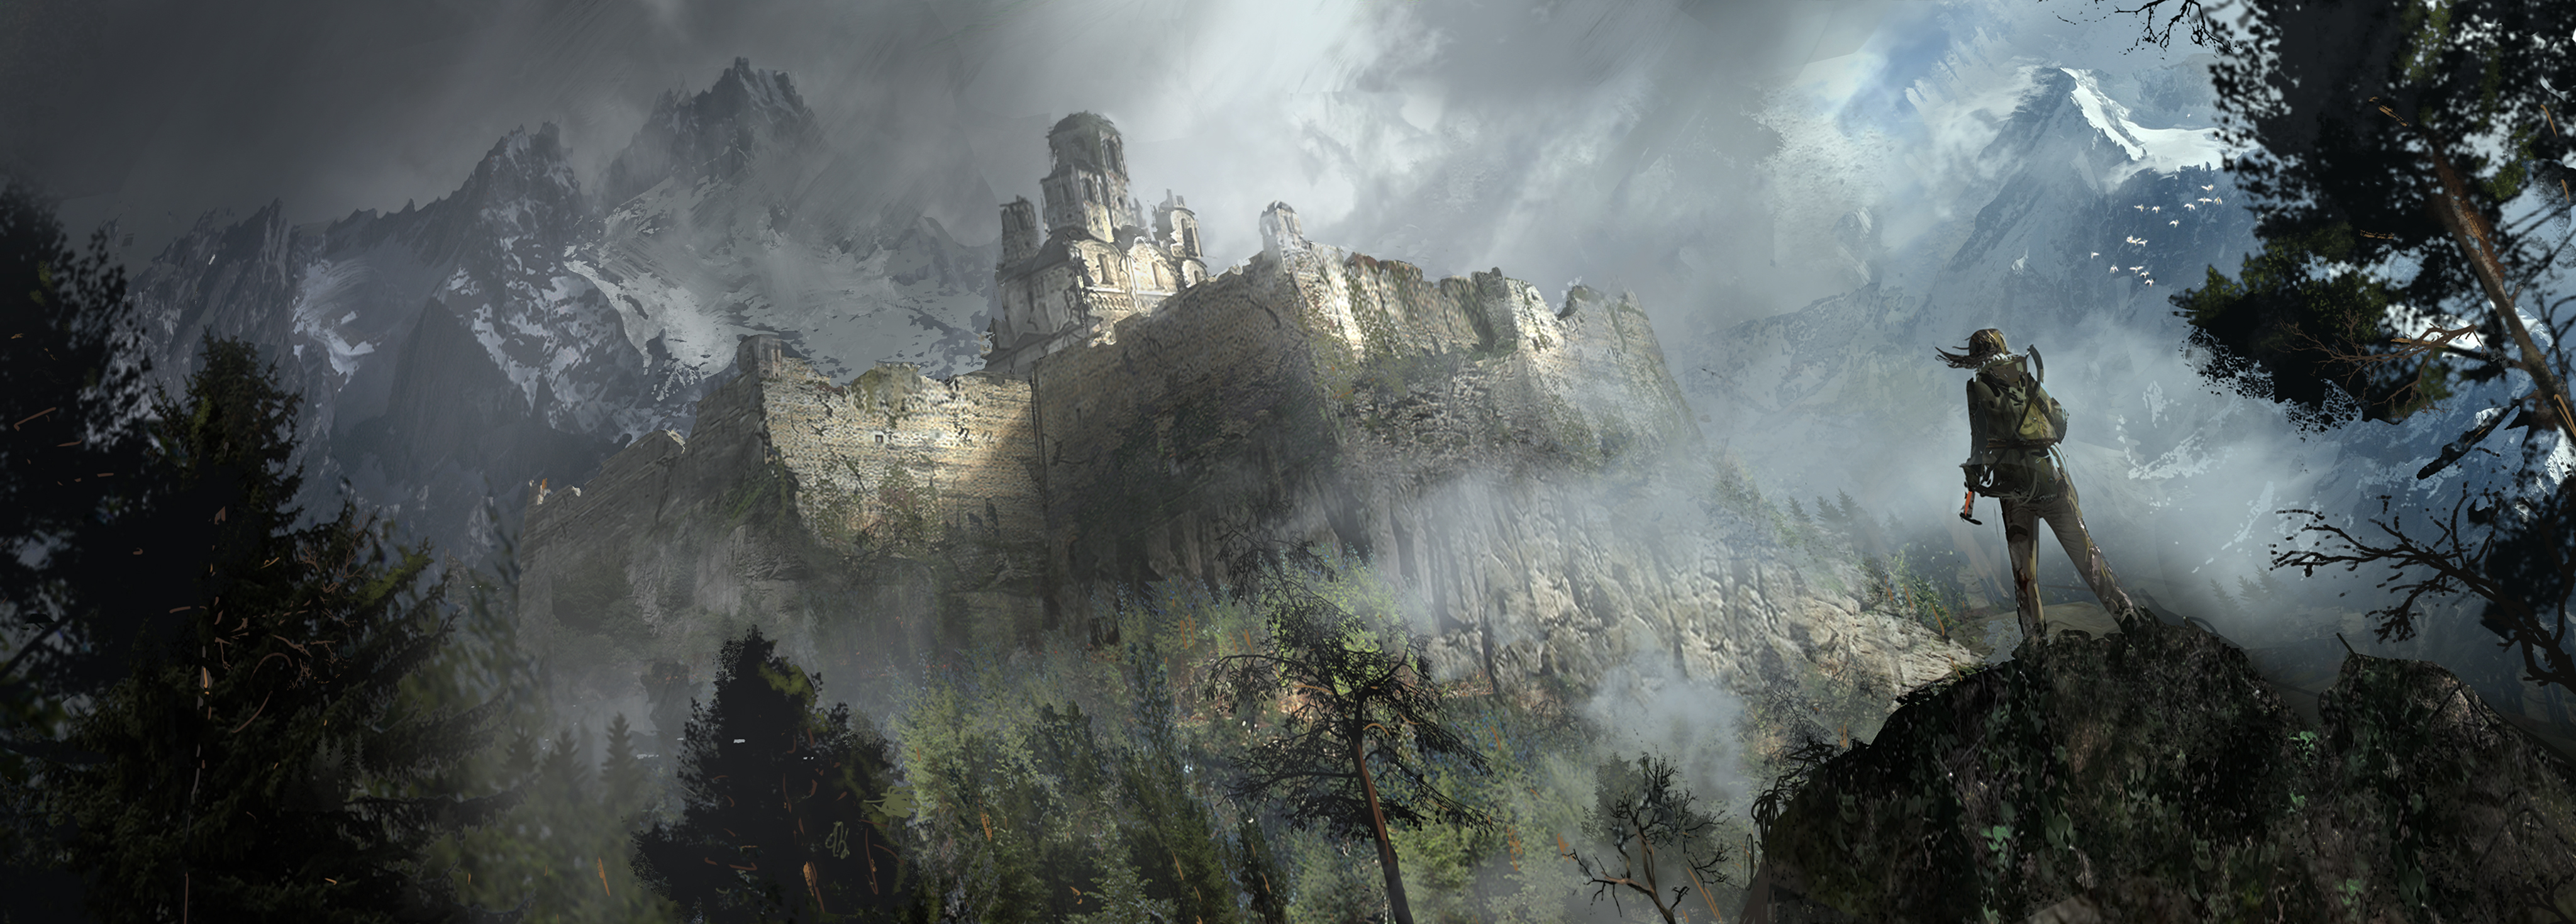 Rise of the Tomb Raider - Concept Art - Tombeau Croft